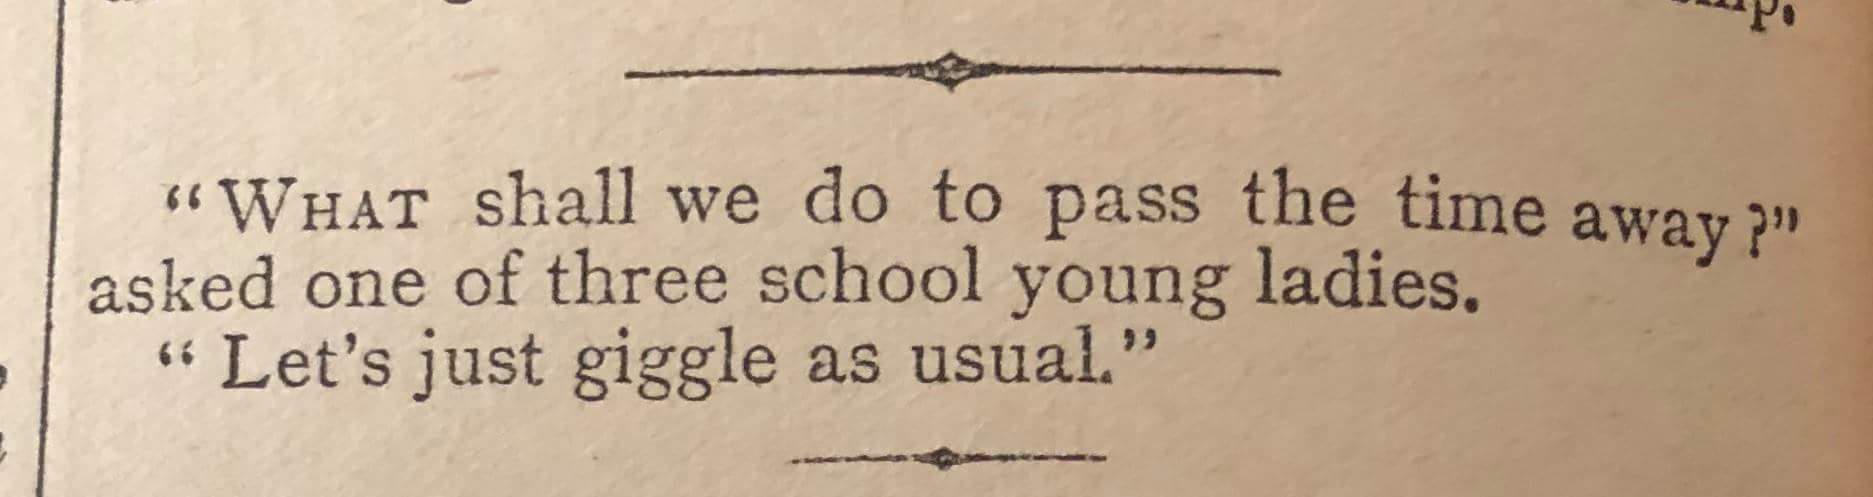 Answers Magazine 1891.jpg